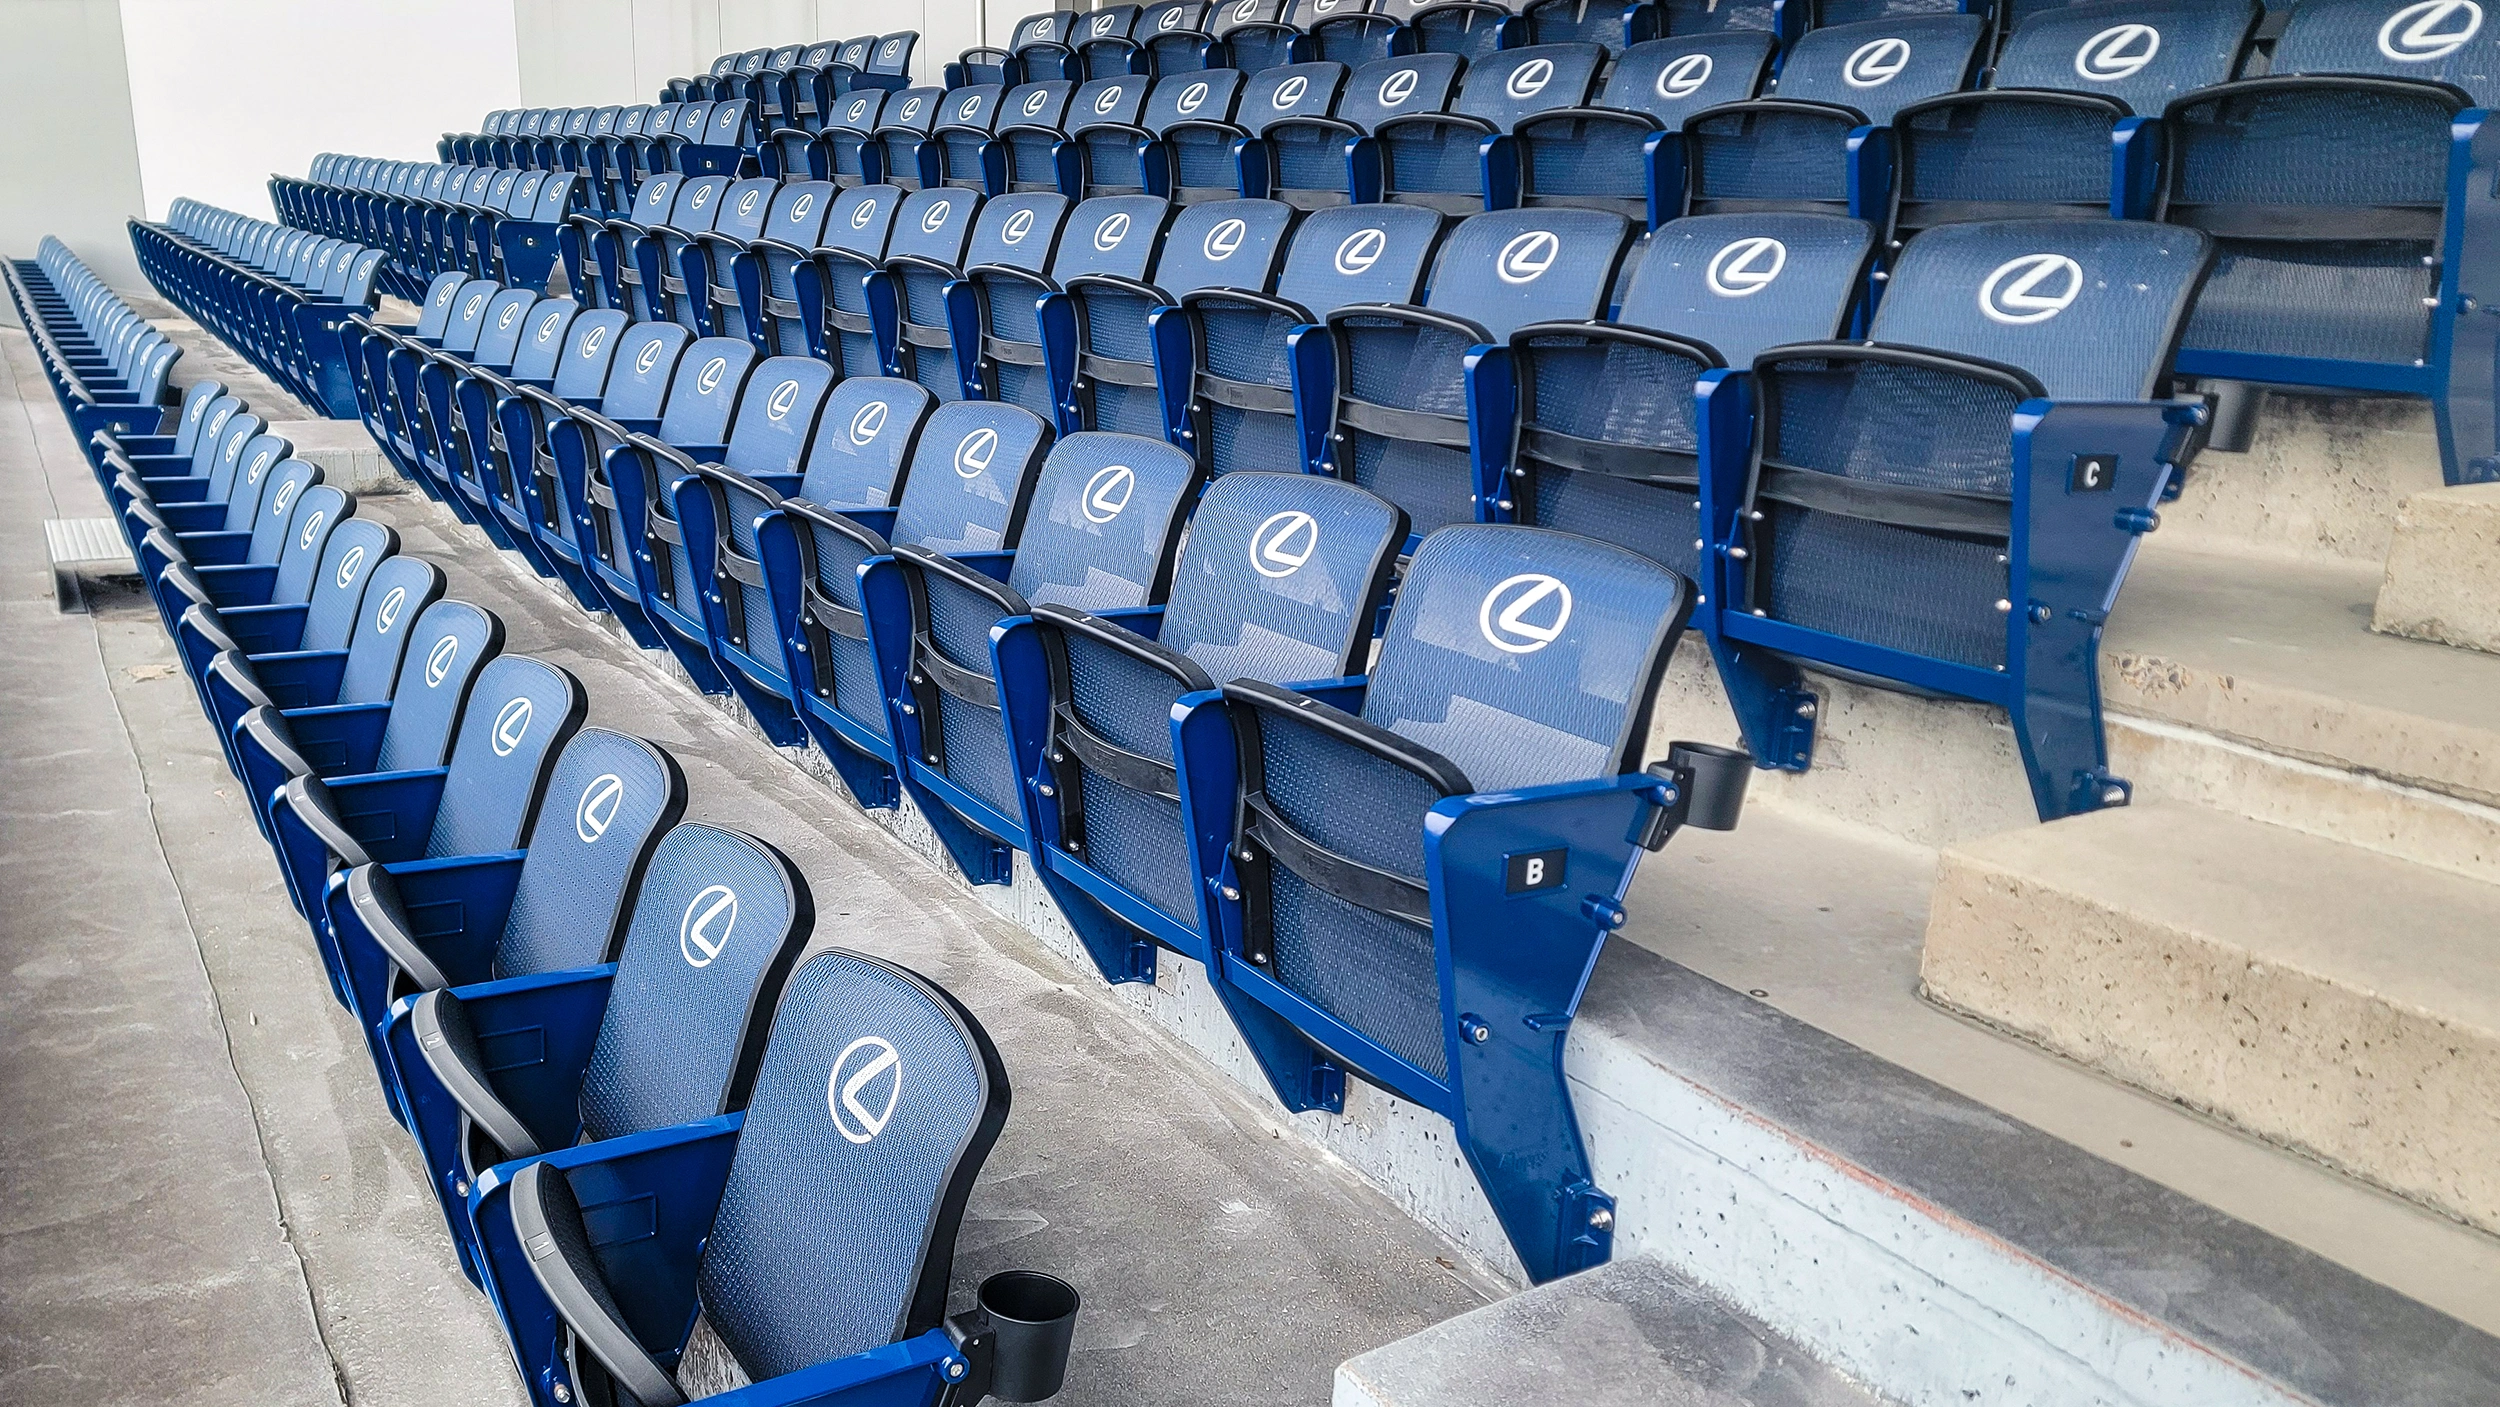 Custom Branded Row seats at Kansas City Royals